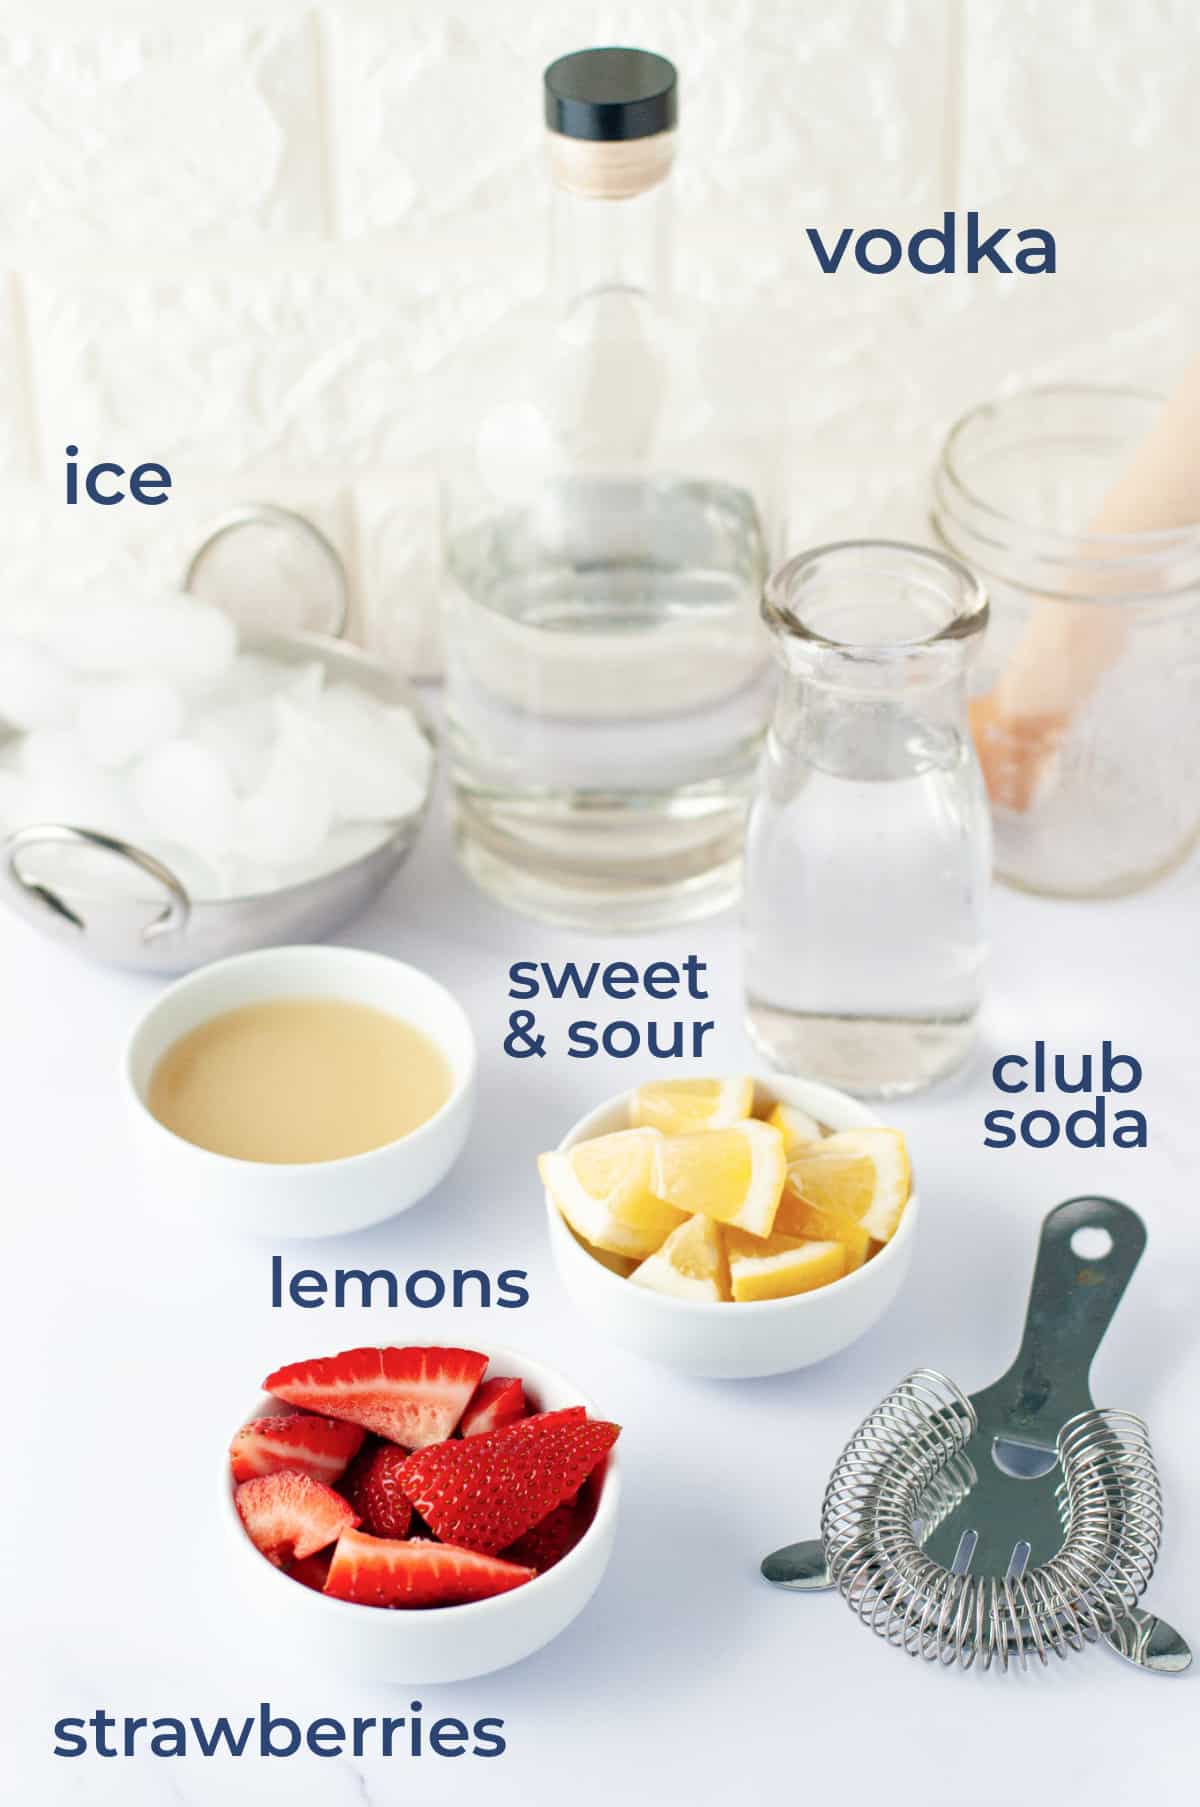 Ingredients for Sparkling Hard Strawberry Lemonade- vodka, strawberries, lemons, sweet and sour, club soda